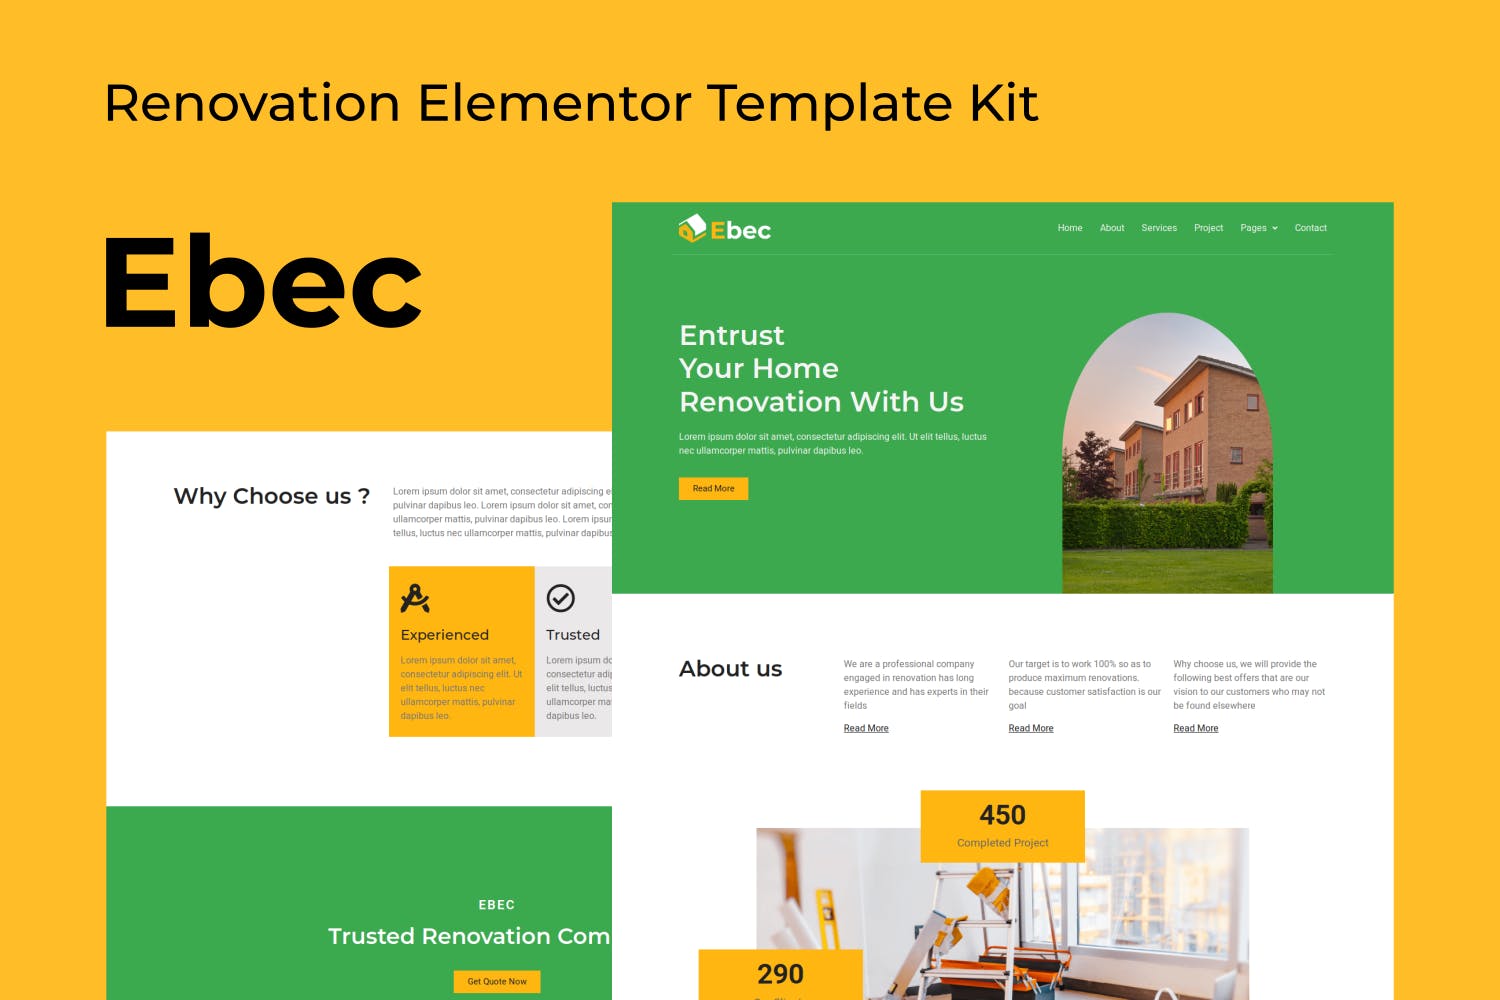 Ebec - Renovation Elementor Template Kit